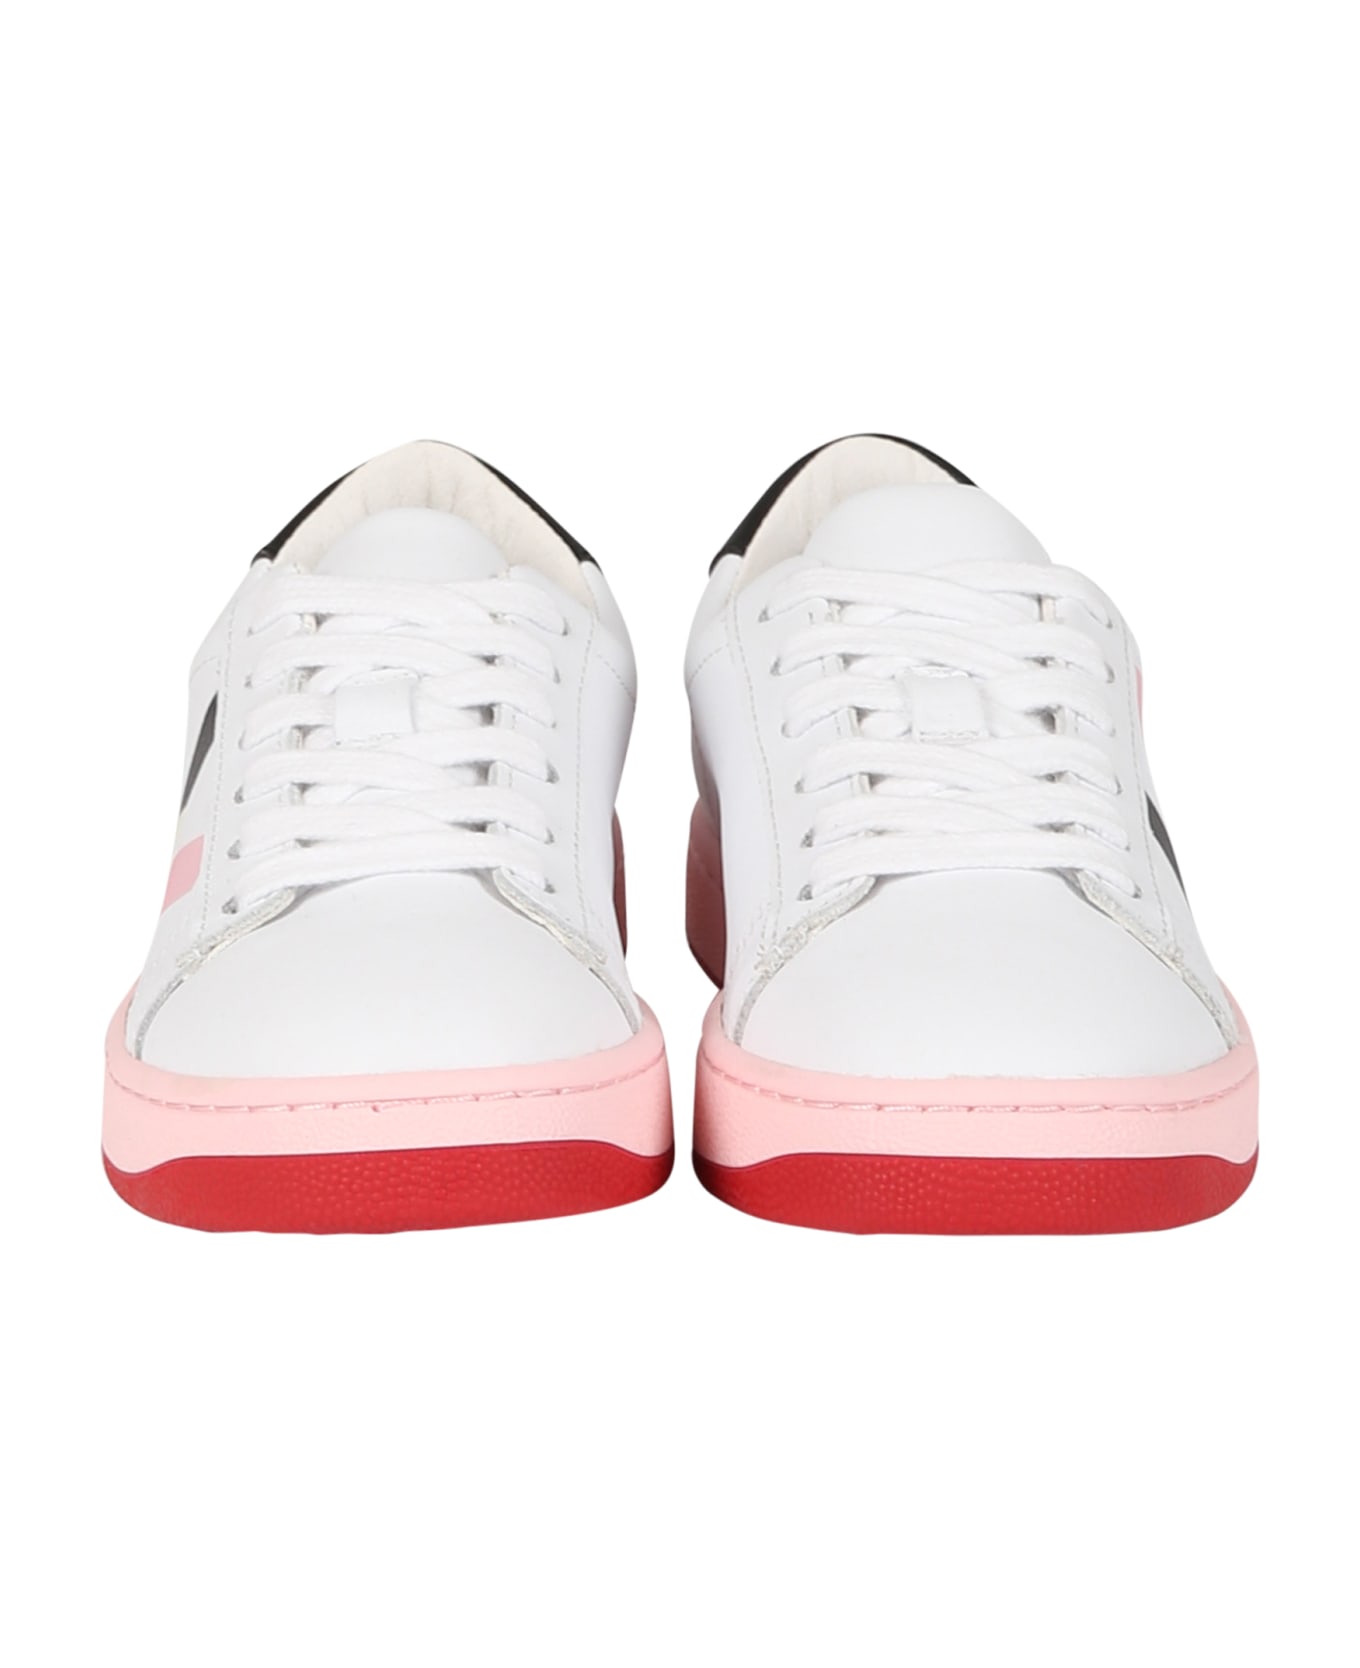 Kenzo Kids White Sneakers For Girl With Logo - White